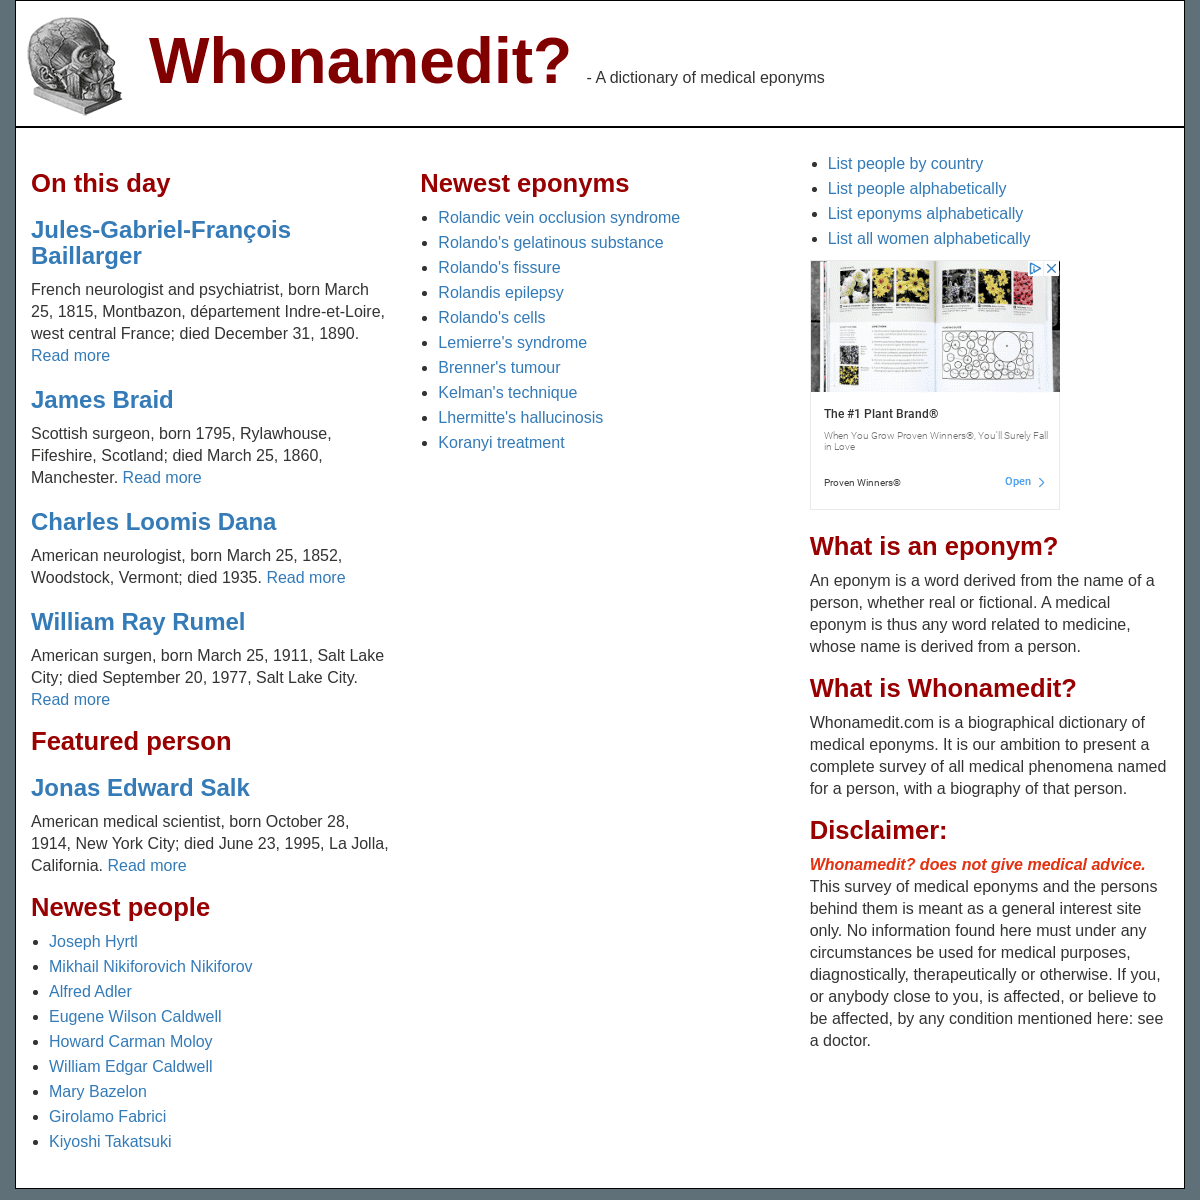 A complete backup of whonamedit.com